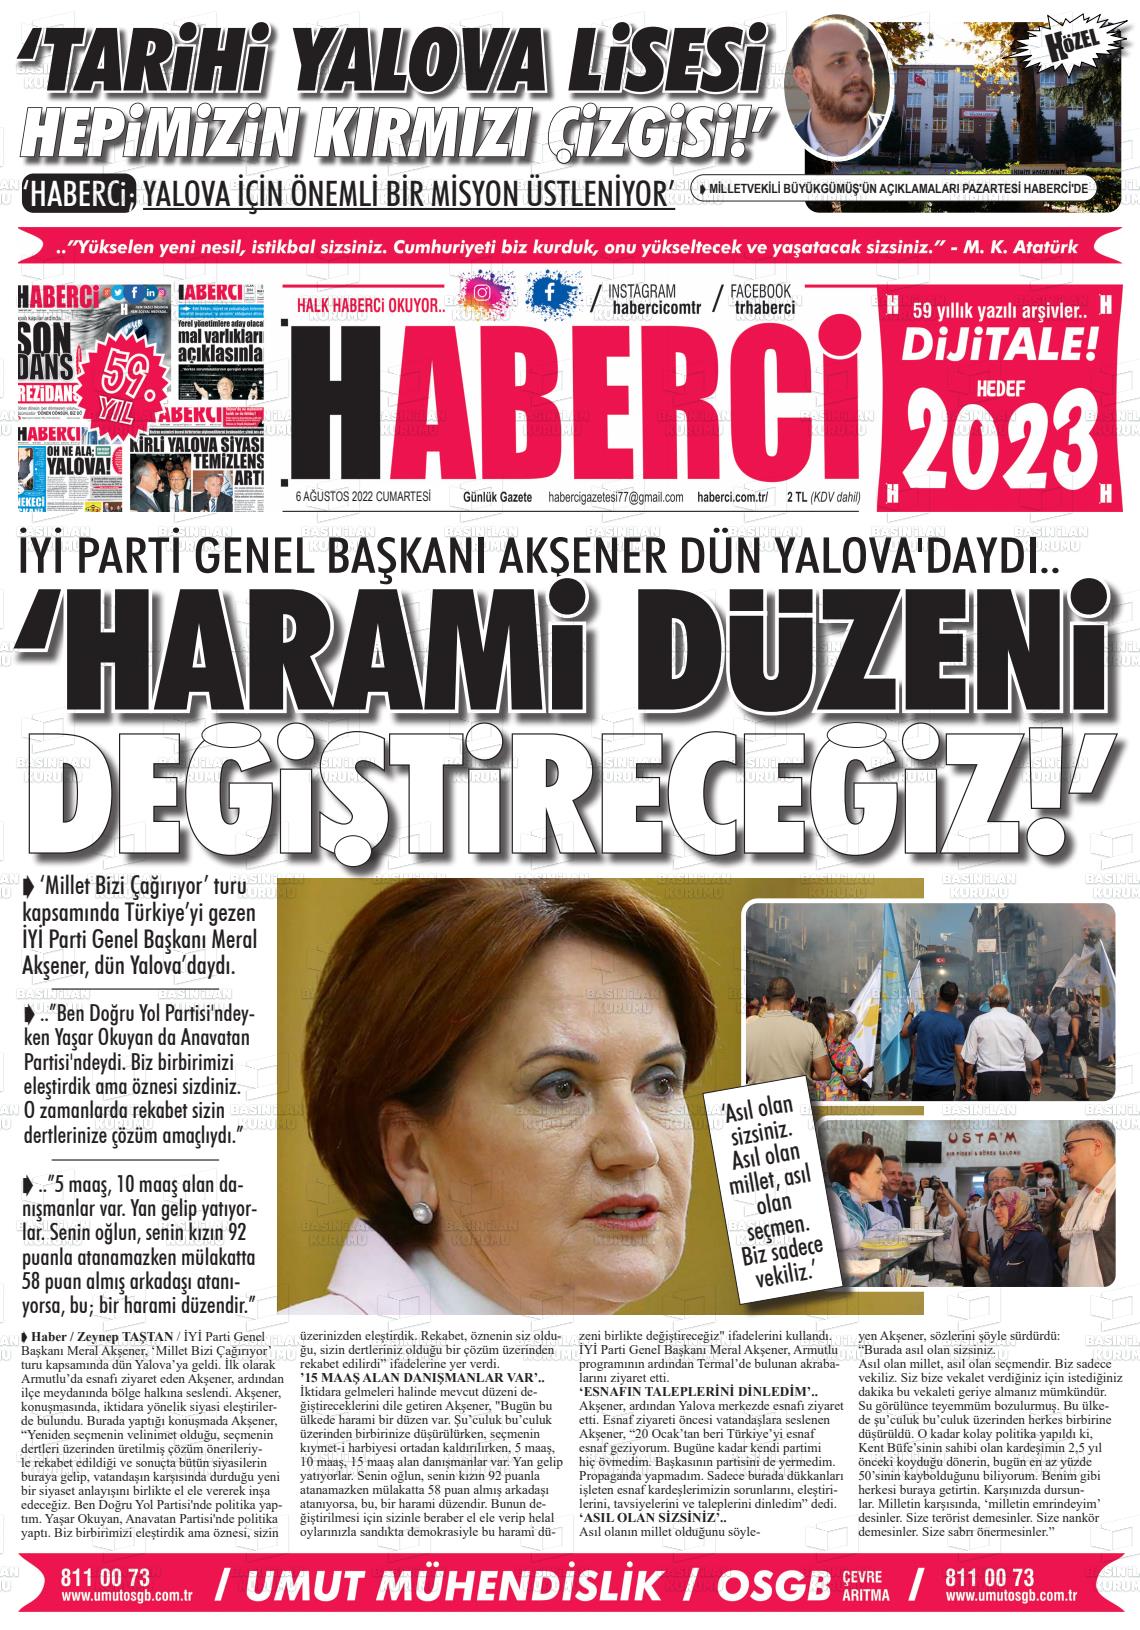 06 Ağustos 2022 Haberci Gazete Manşeti